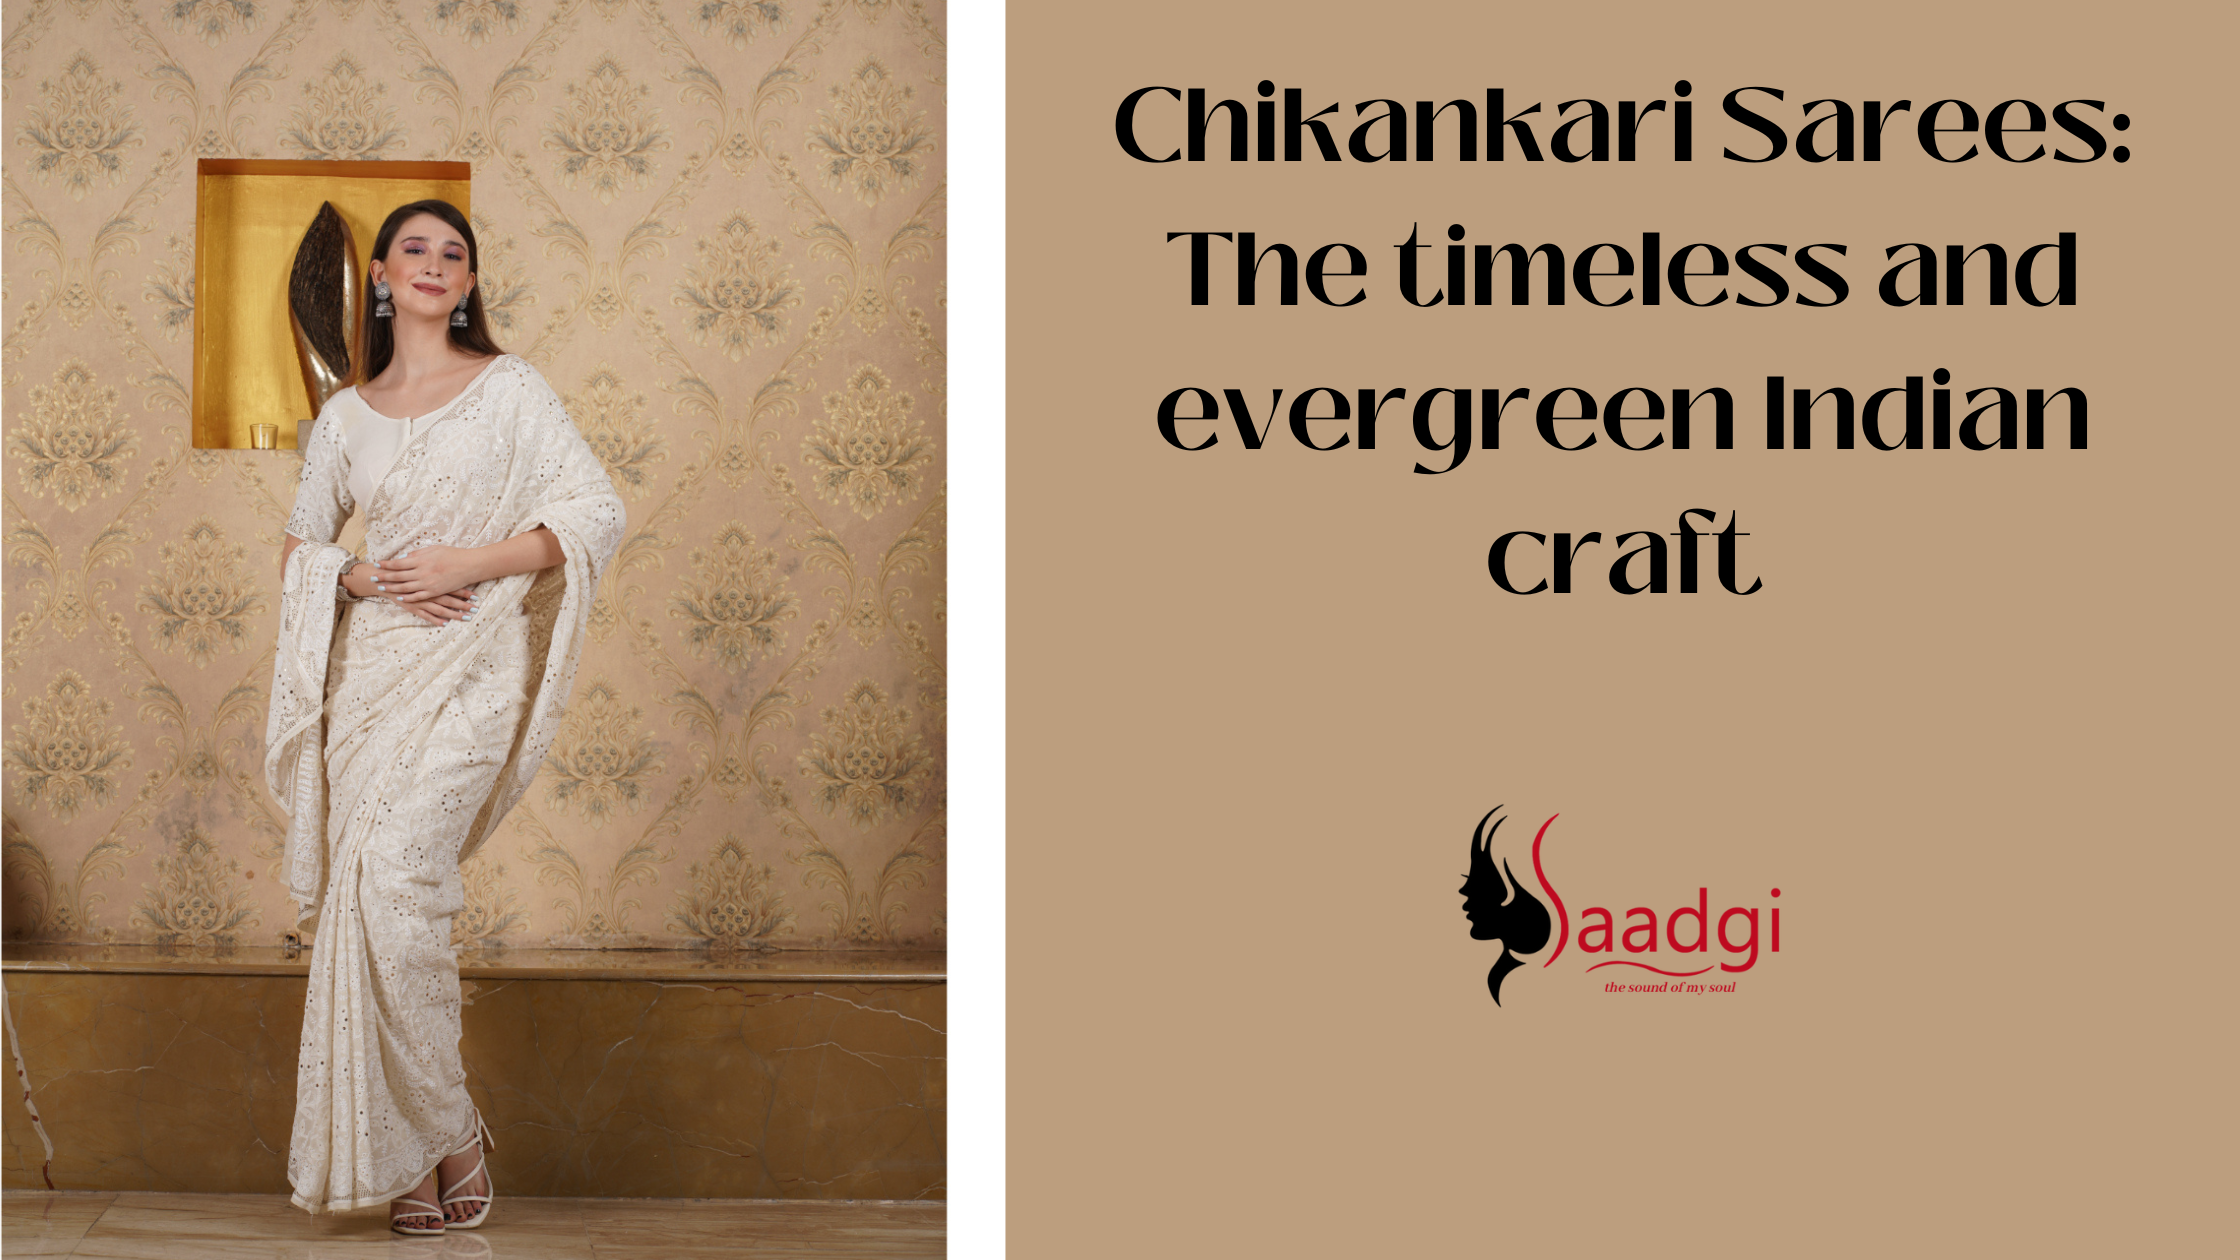 Chikankari Sarees: The timeless and evergreen Indian craft